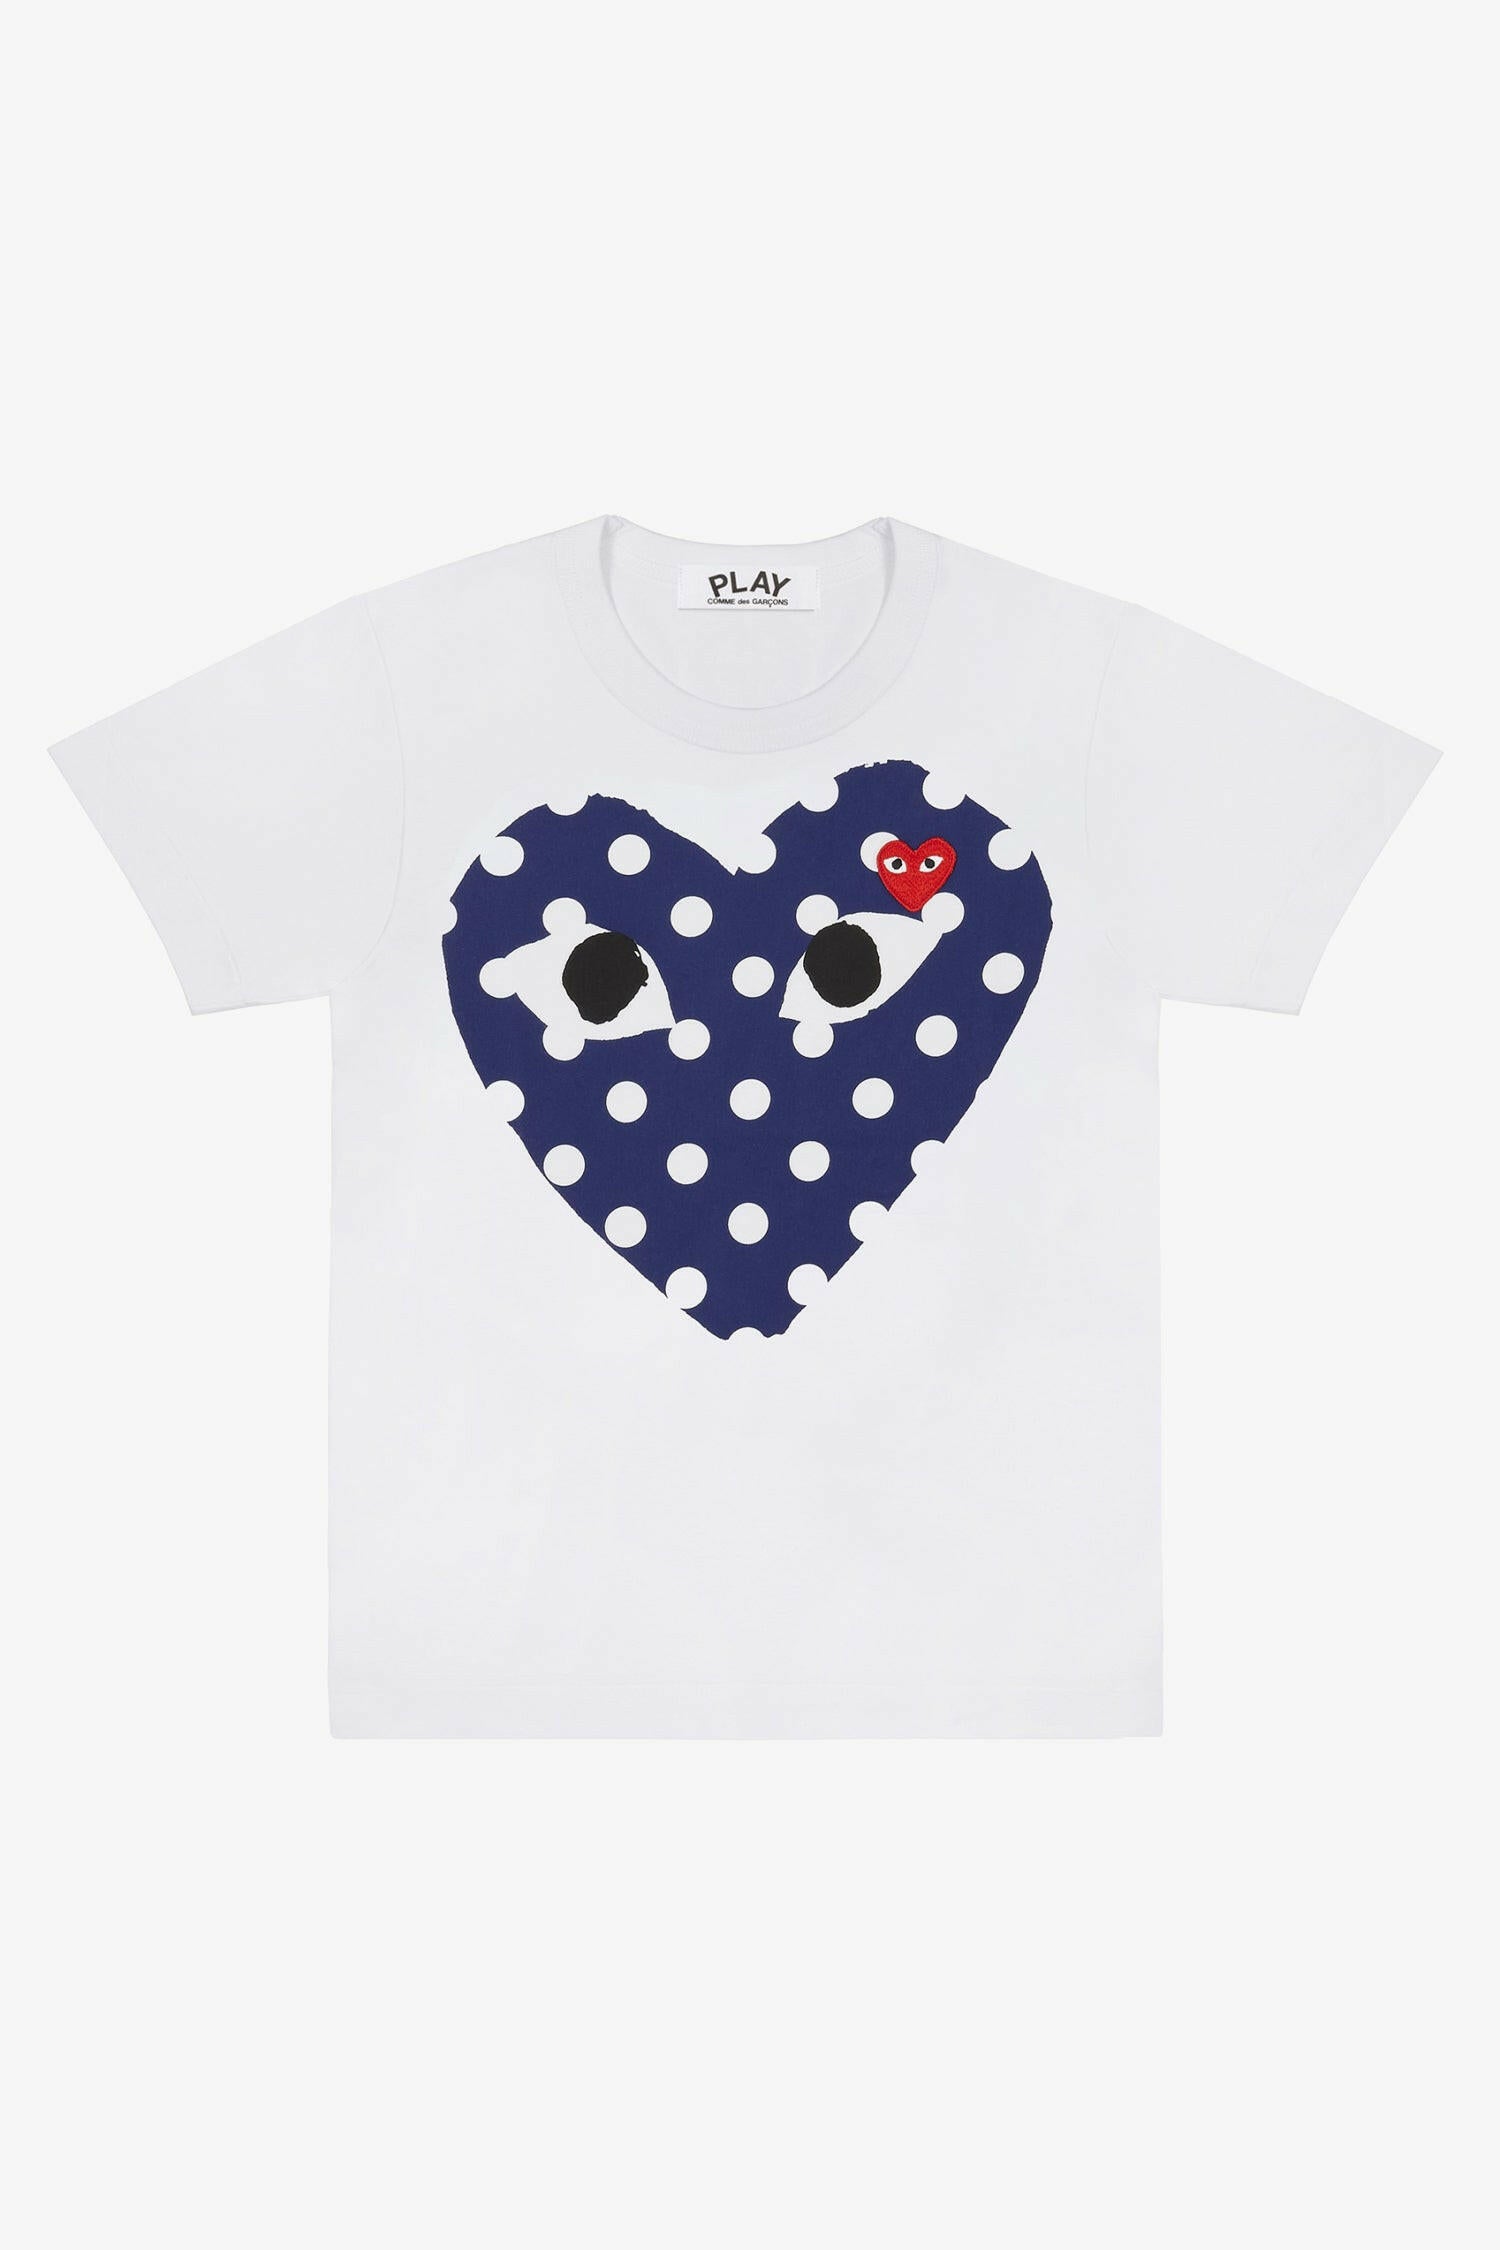 Selectshop FRAME - COMME DES GARCONS PLAY Polka Dot Big Heart T-Shirt T-Shirt Dubai